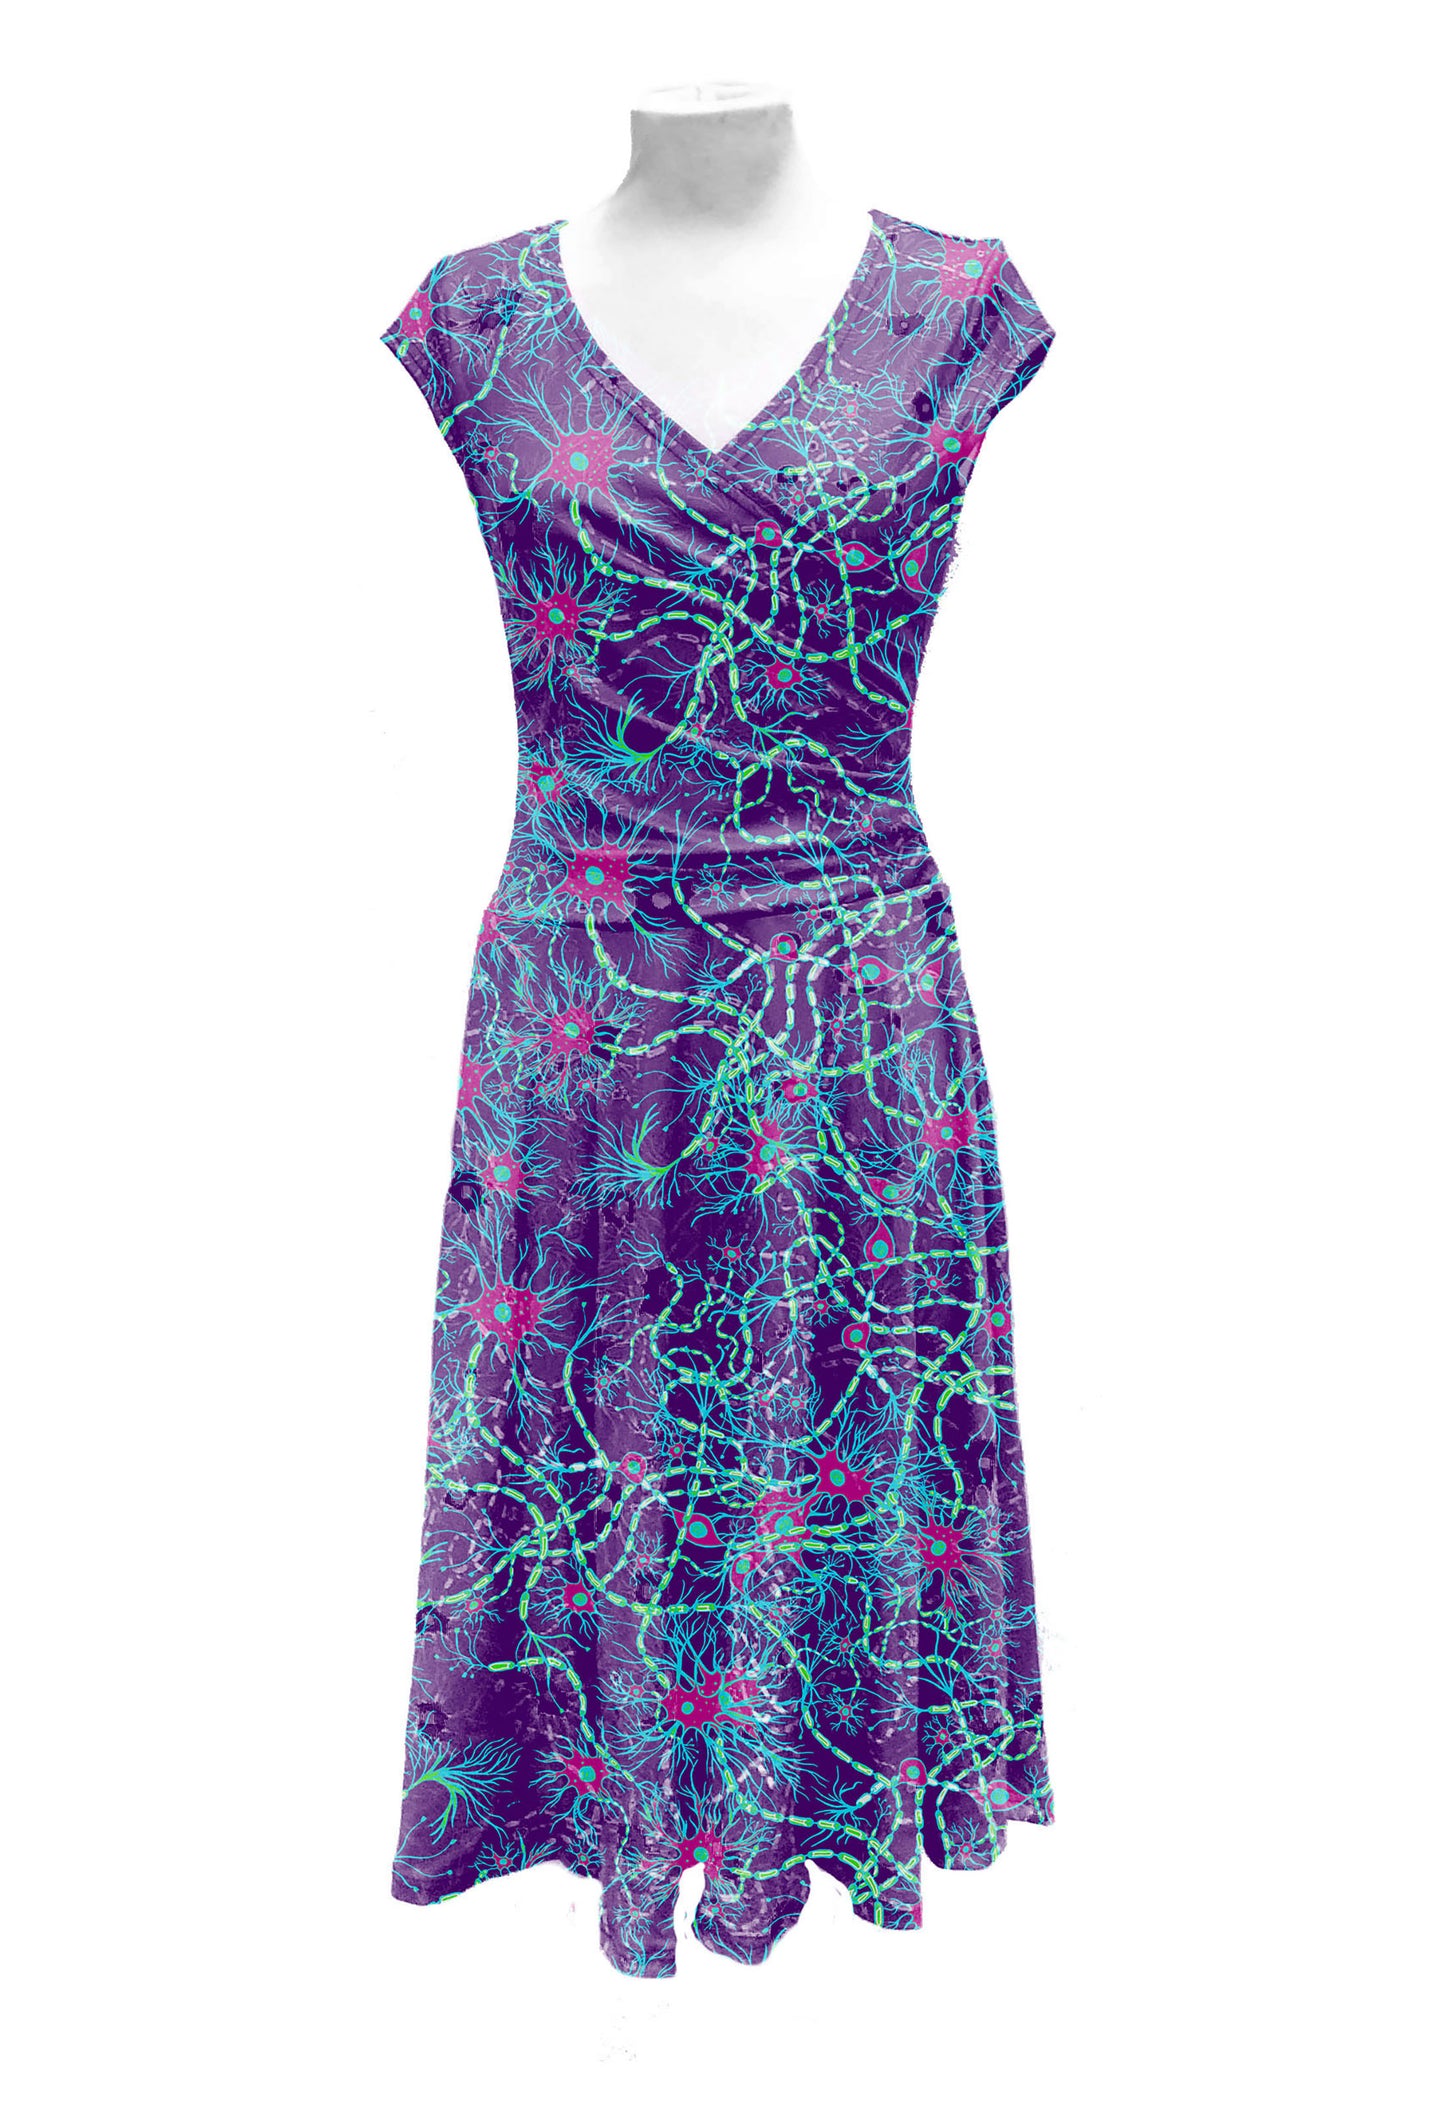 Indigo neuron cap sleeve Wrap dress